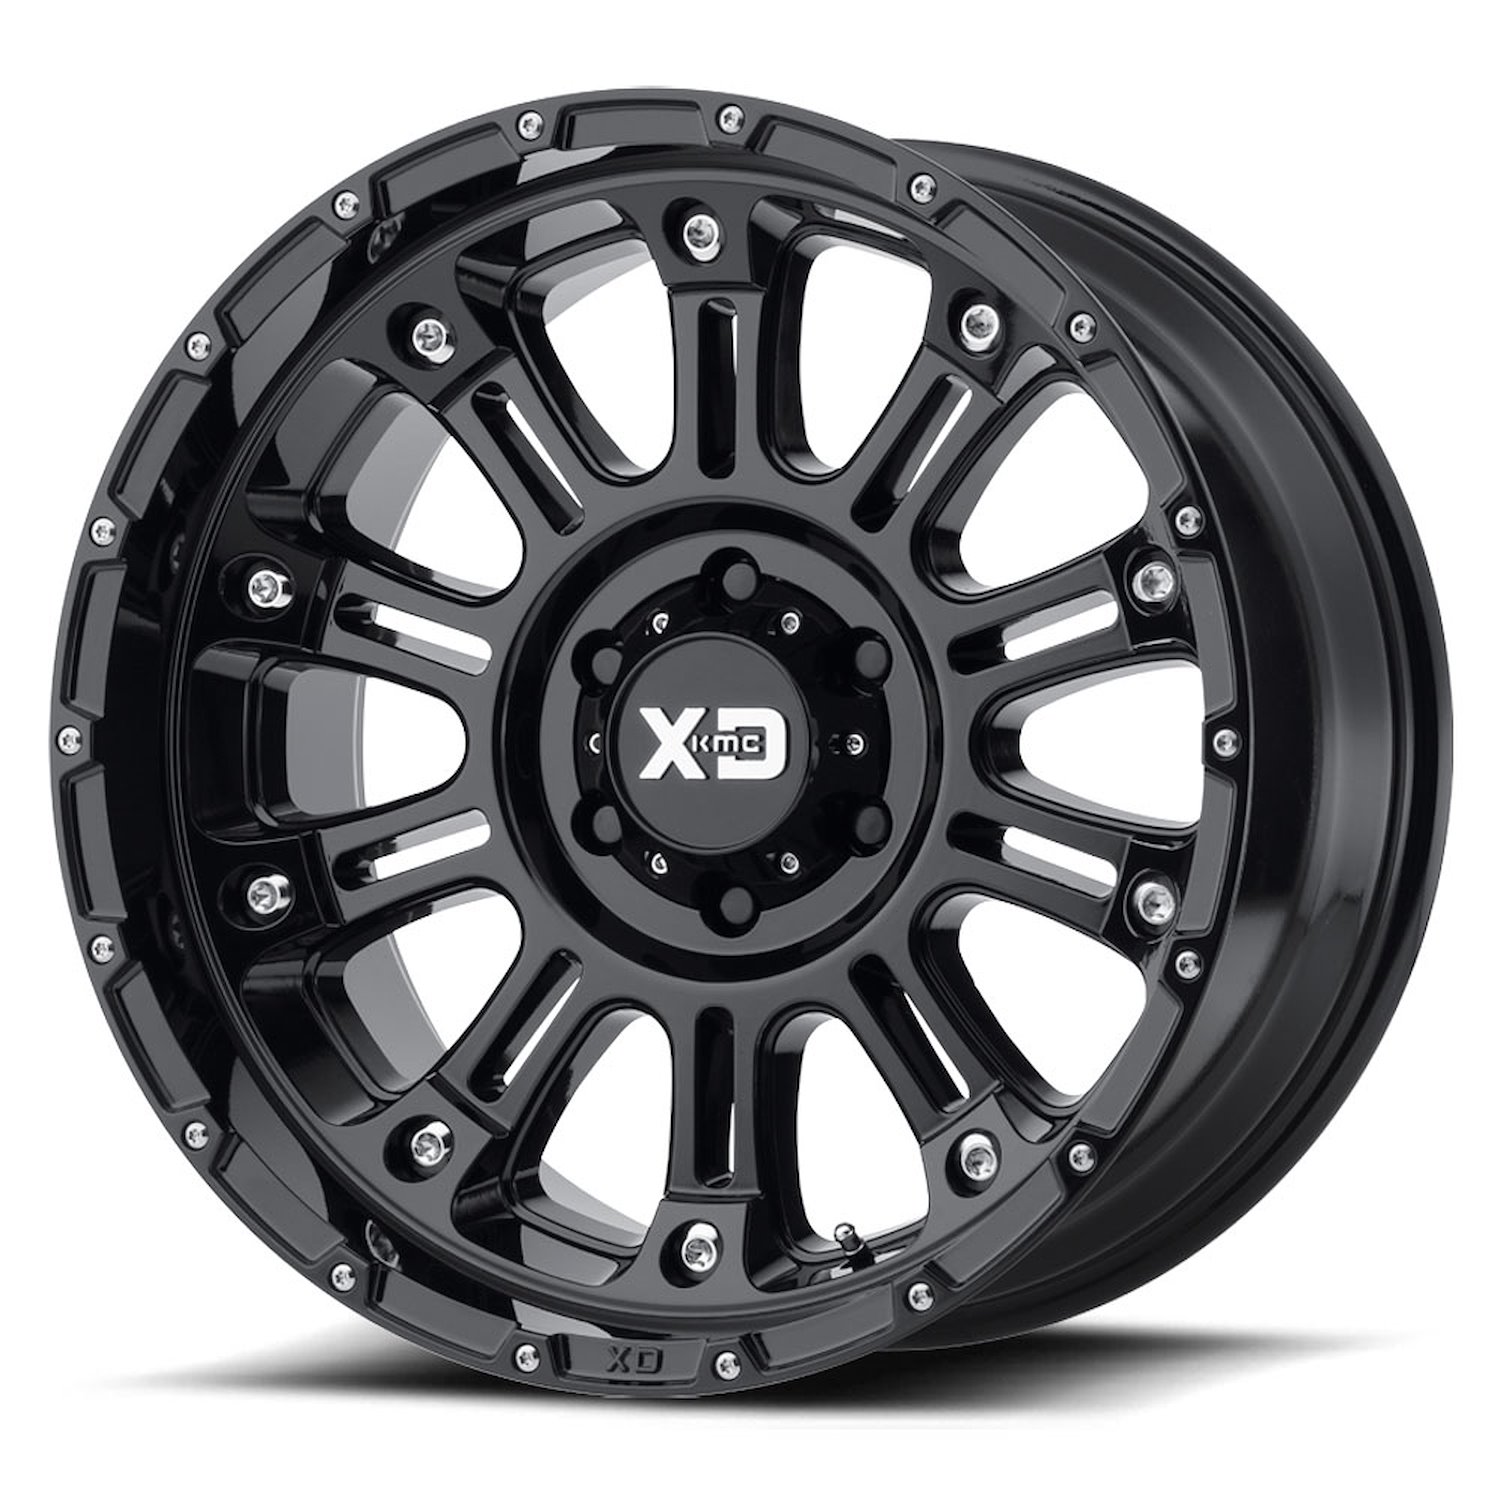 XD829 Series Hoss Wheel Size: 18'' x 9''